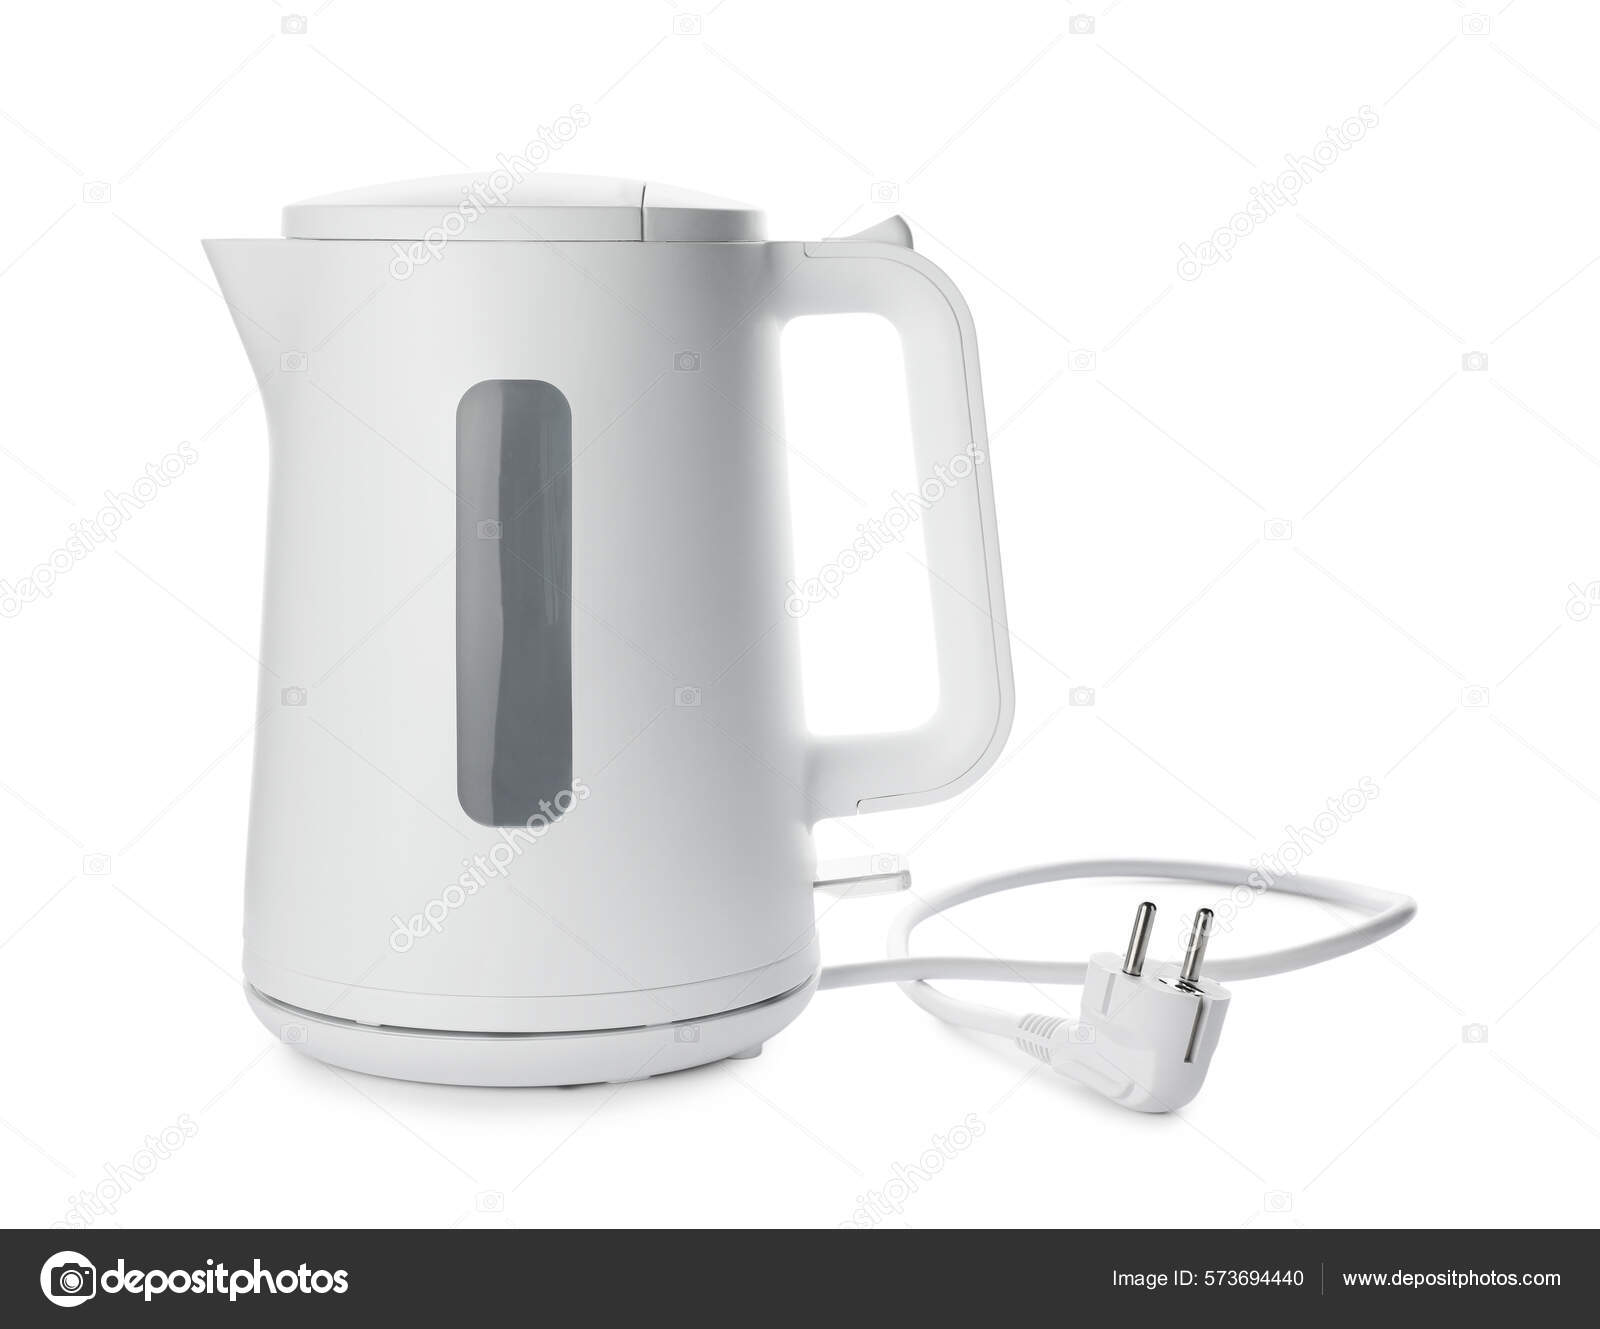 https://st.depositphotos.com/16122460/57369/i/1600/depositphotos_573694440-stock-photo-modern-electric-kettle-base-plug.jpg